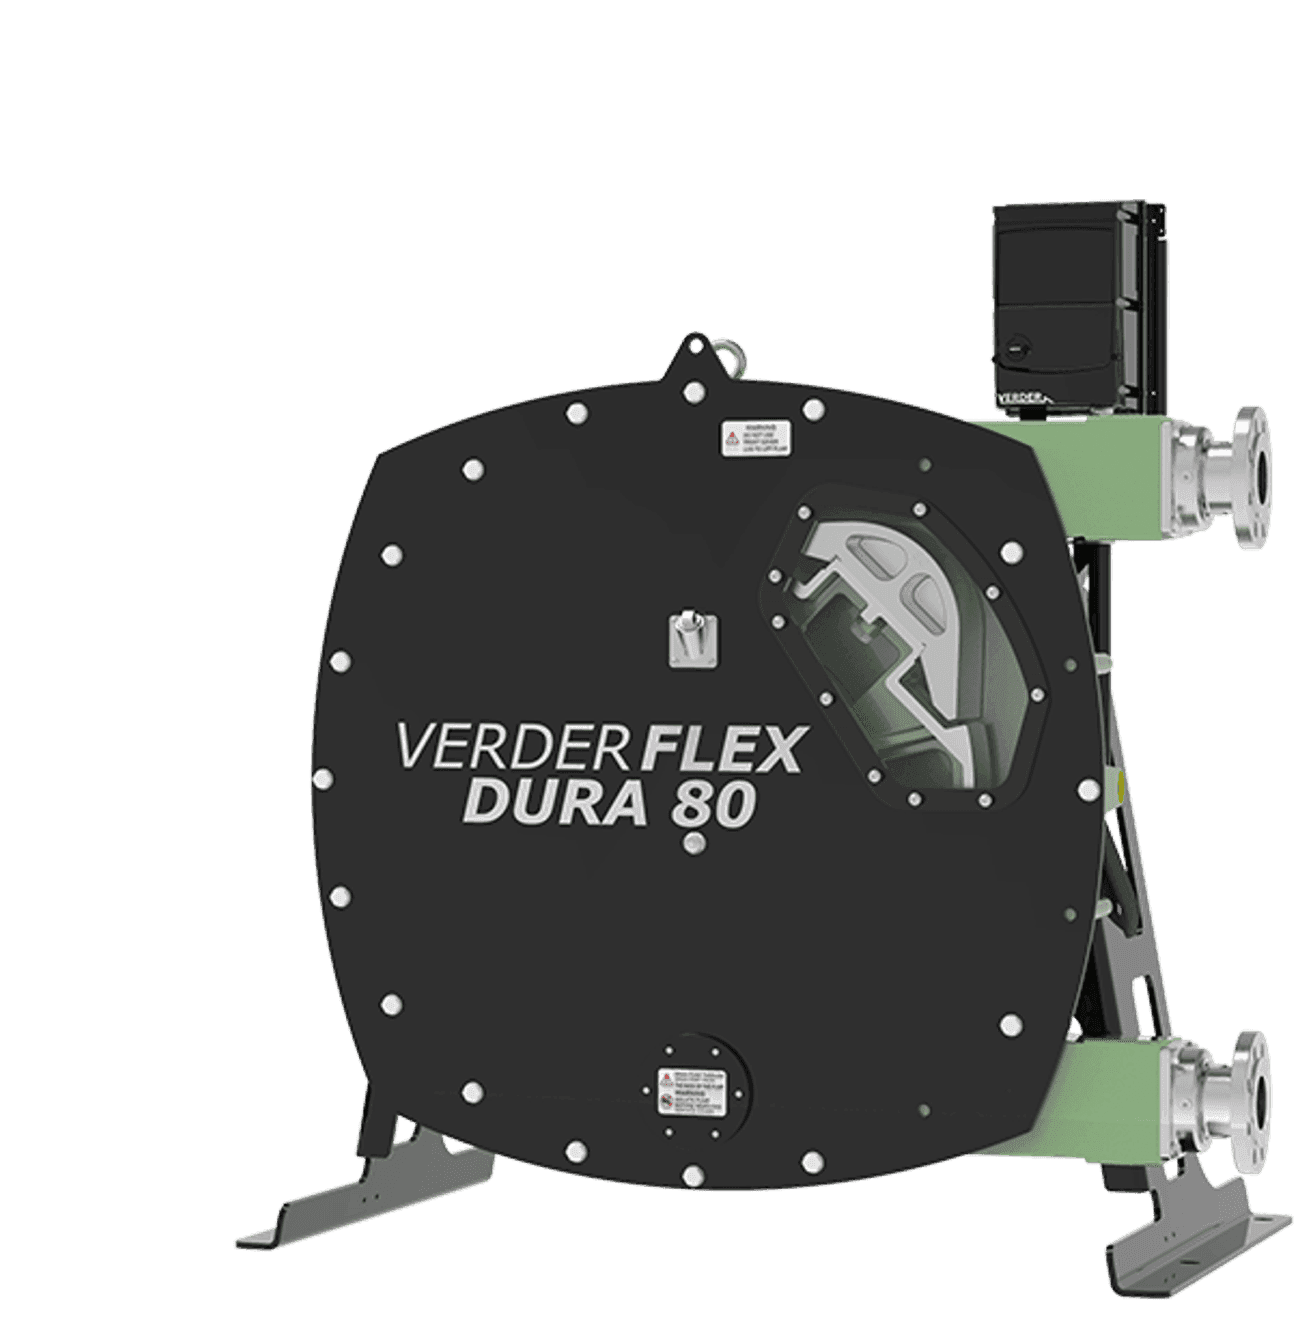 Verderflex iDura 45 - 80 product image